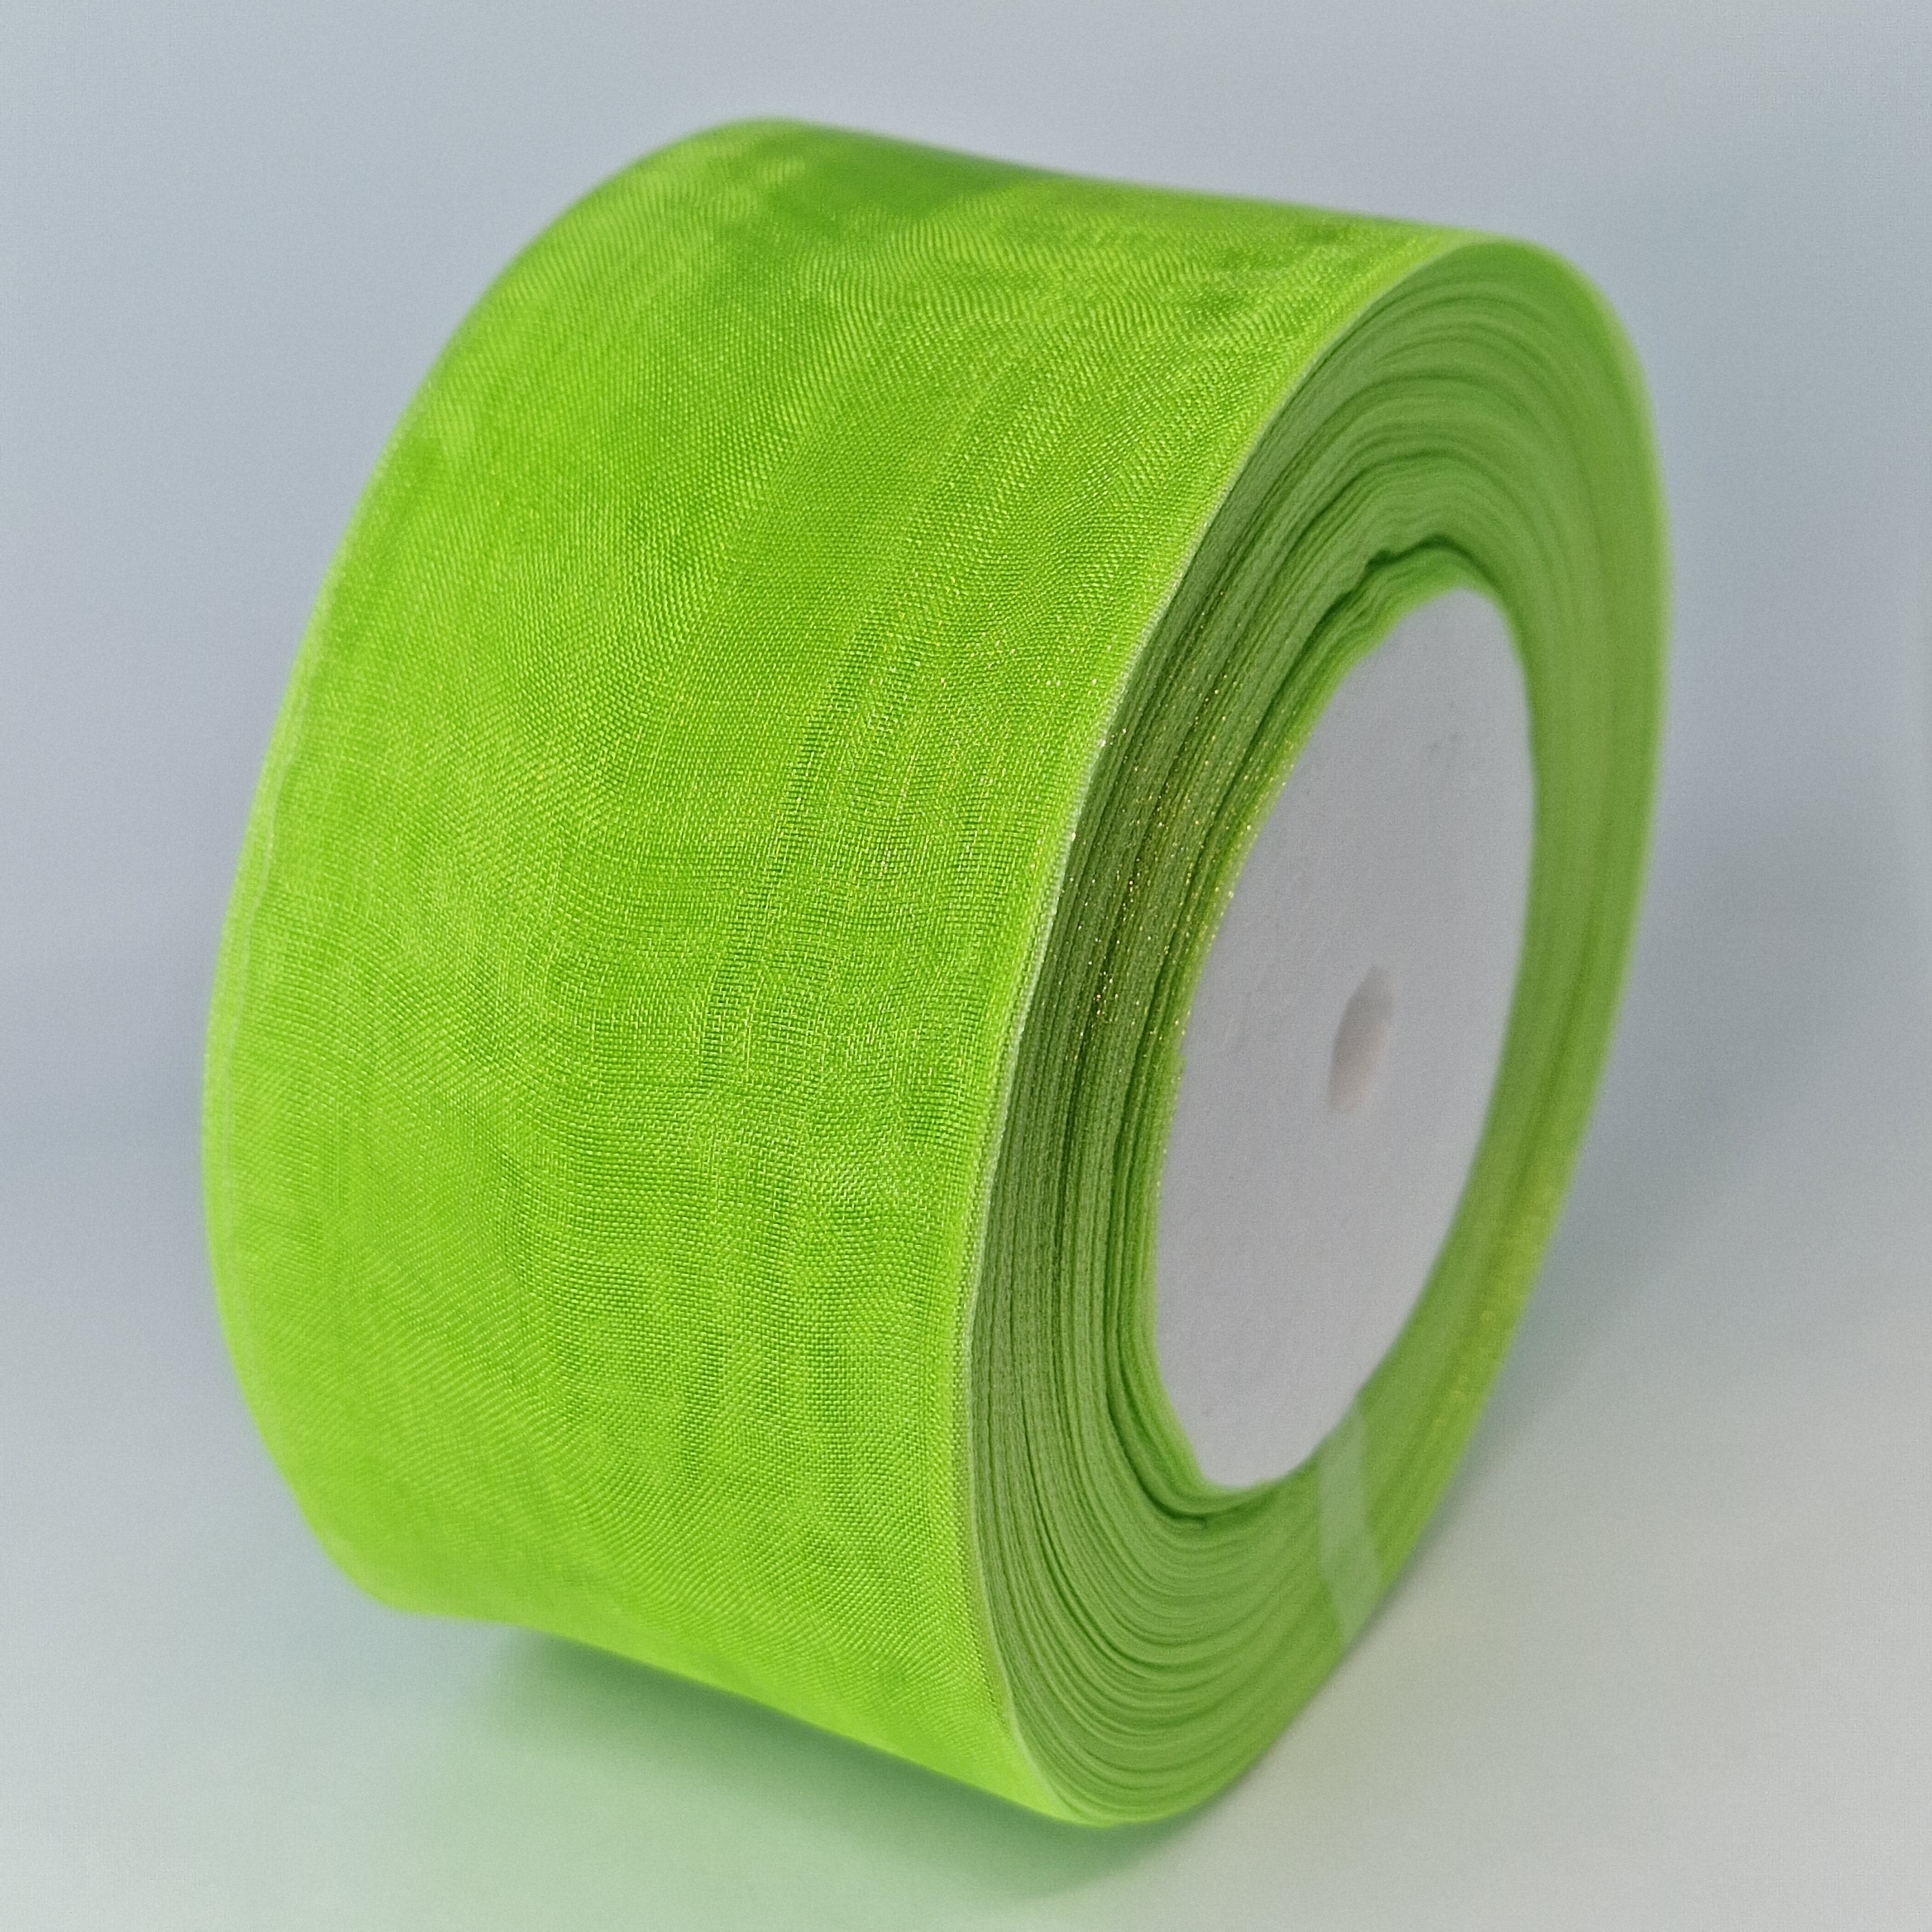 MajorCrafts 50mm 45metres Sheer Organza Fabric Ribbon Roll Light Green Shade R1126